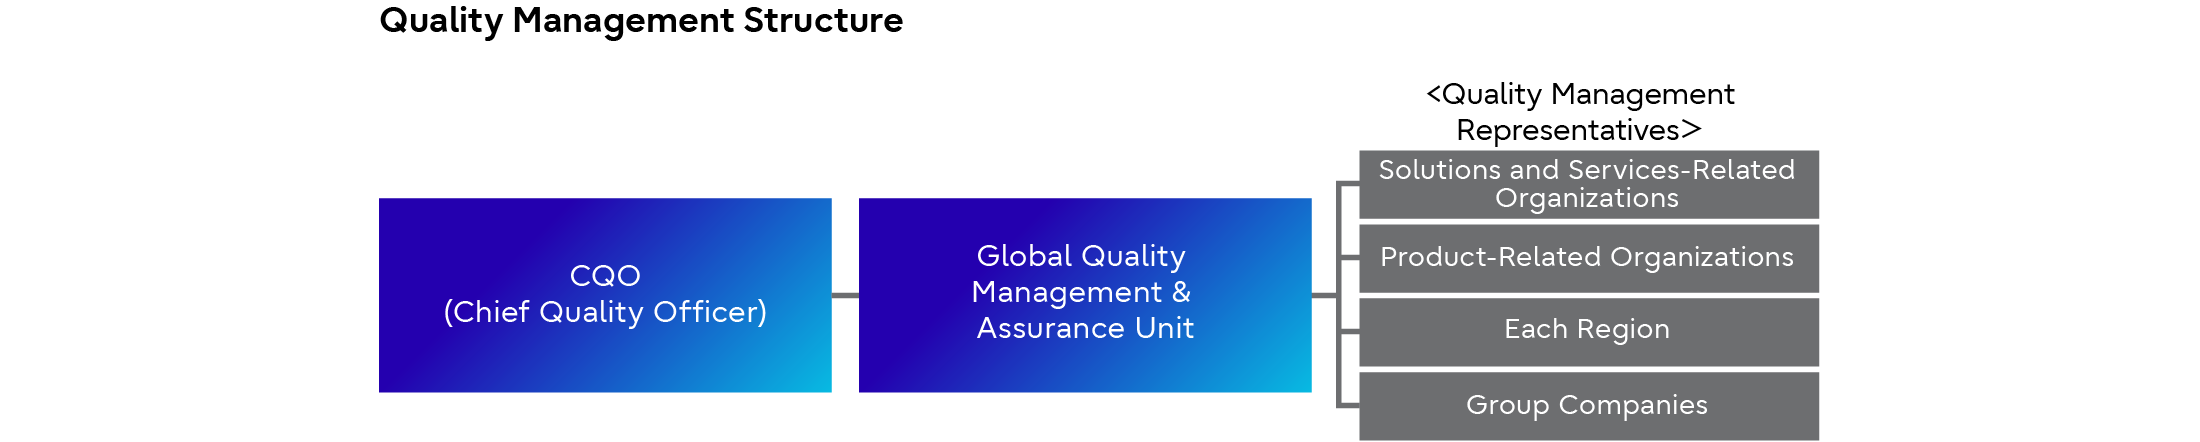 Quality Management Structure